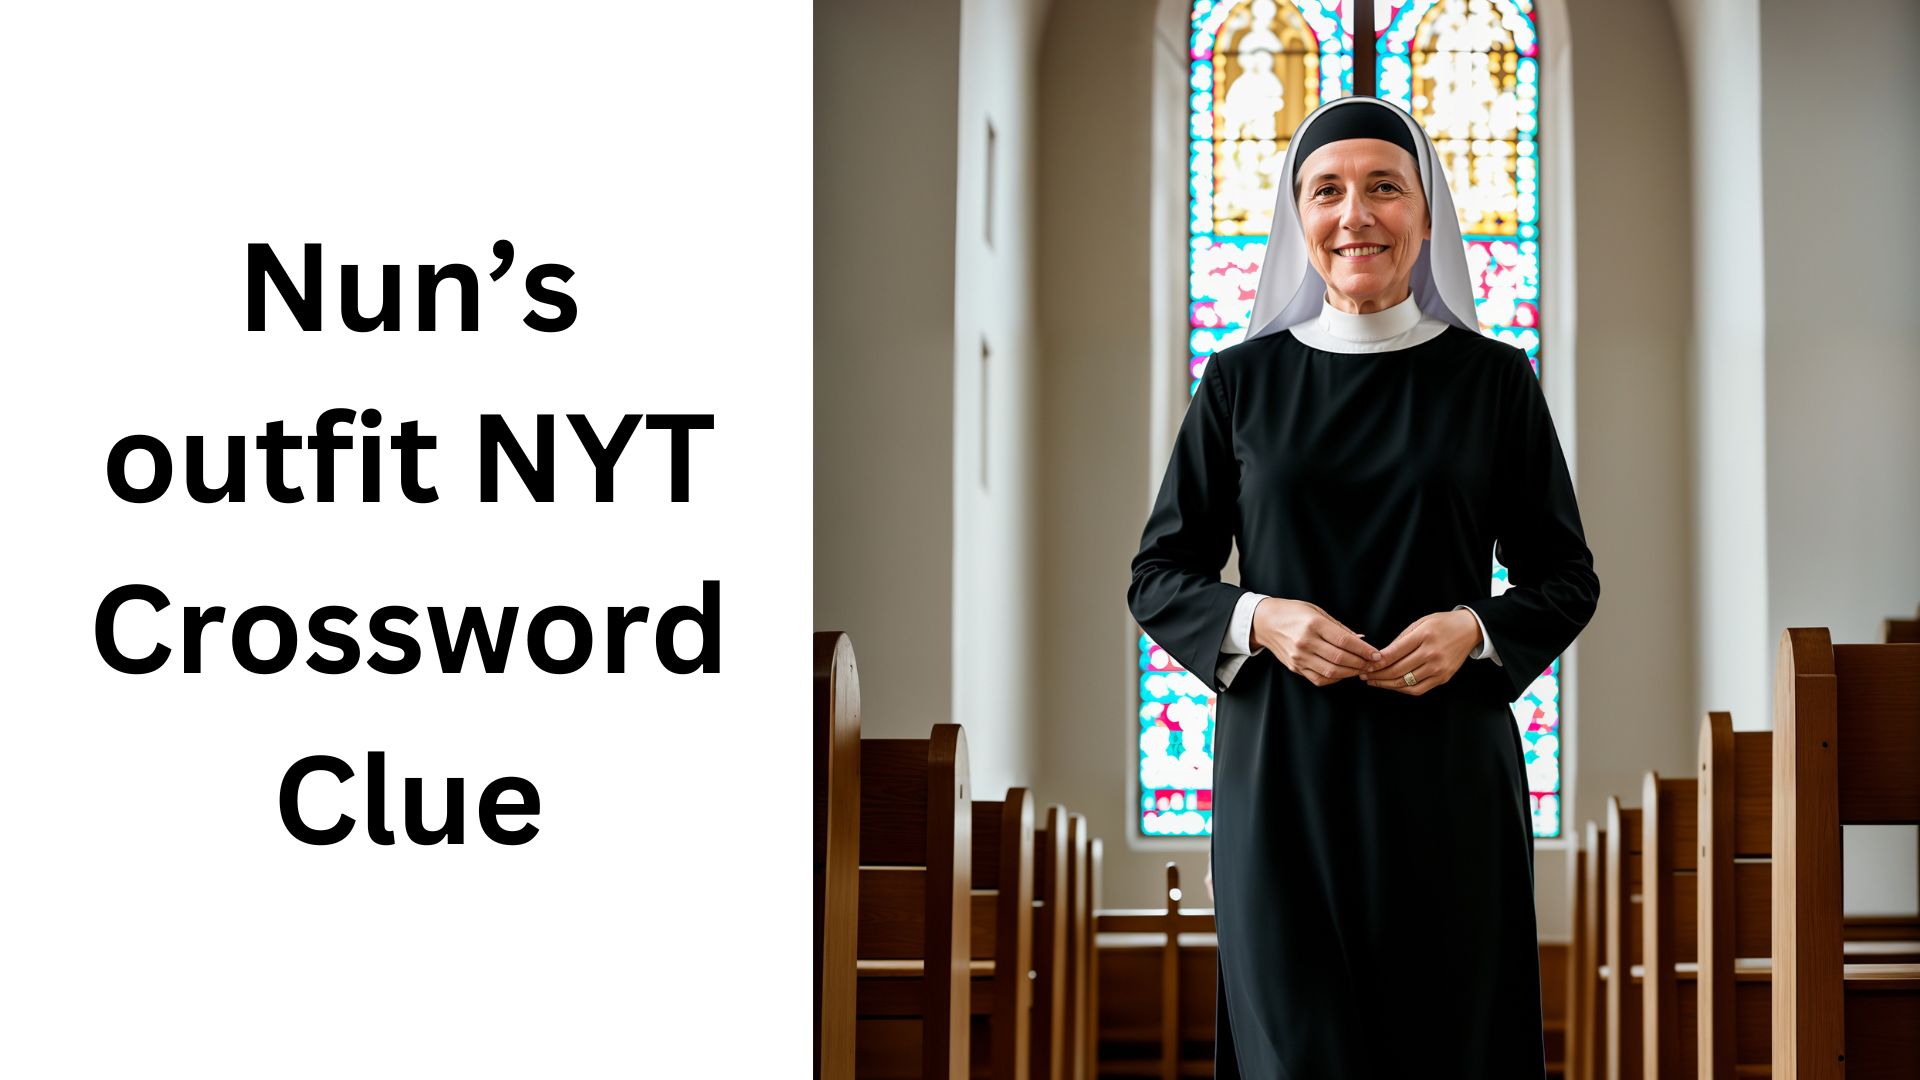 Nun’s Outfit NYT Crossword Clue